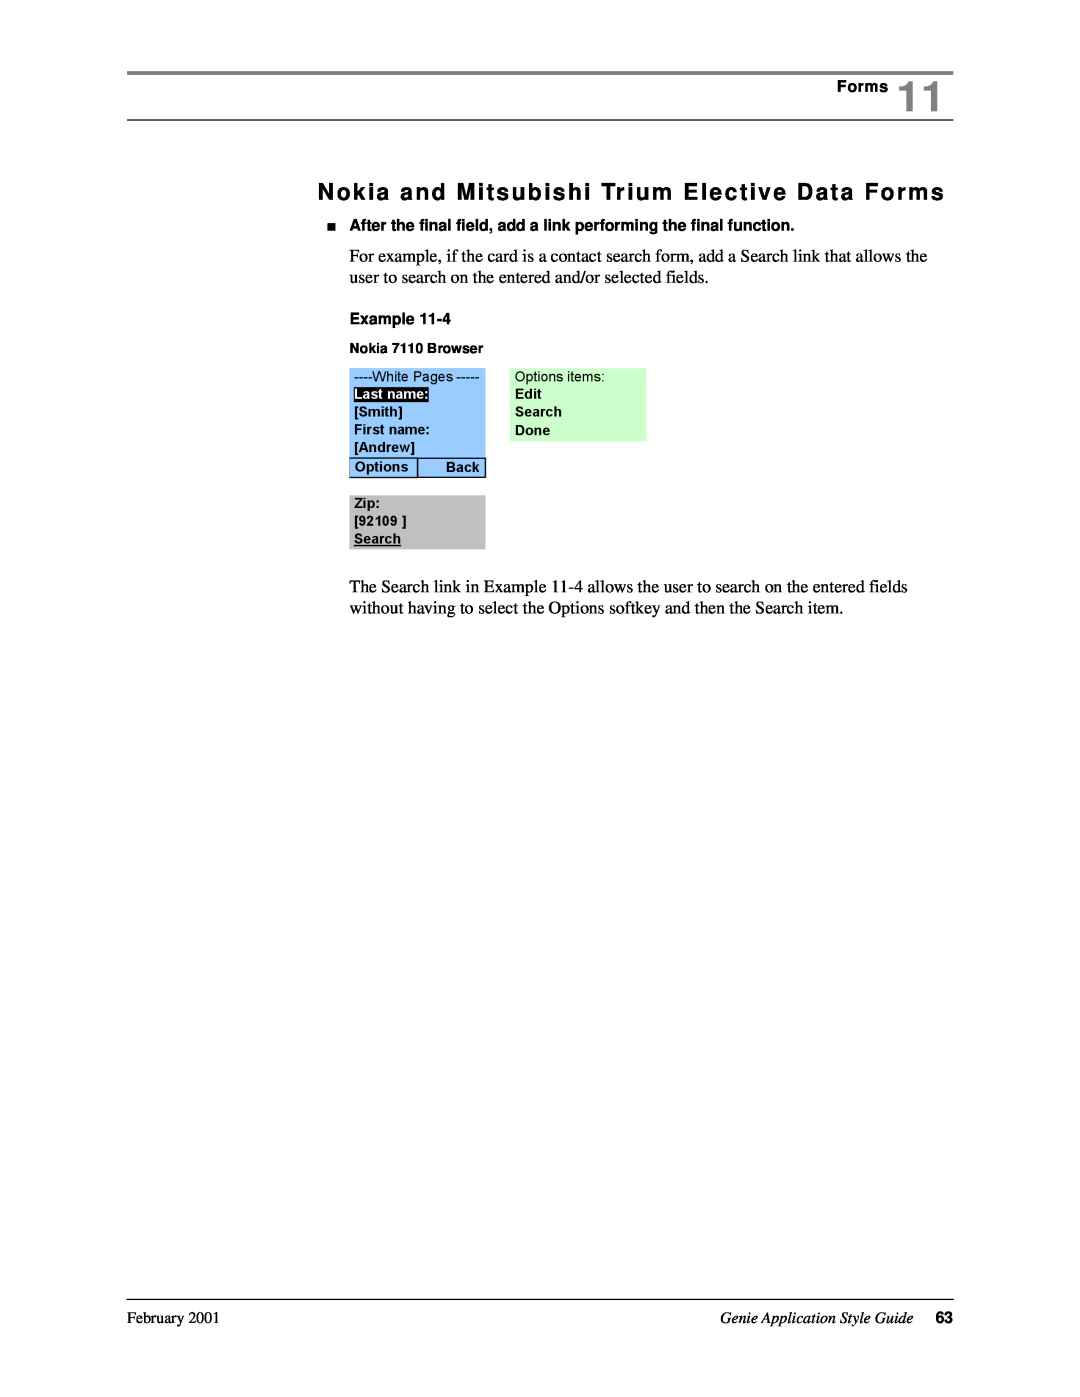 Genie 7110 manual Nokia and Mitsubishi Trium Elective Data Forms, Last name 